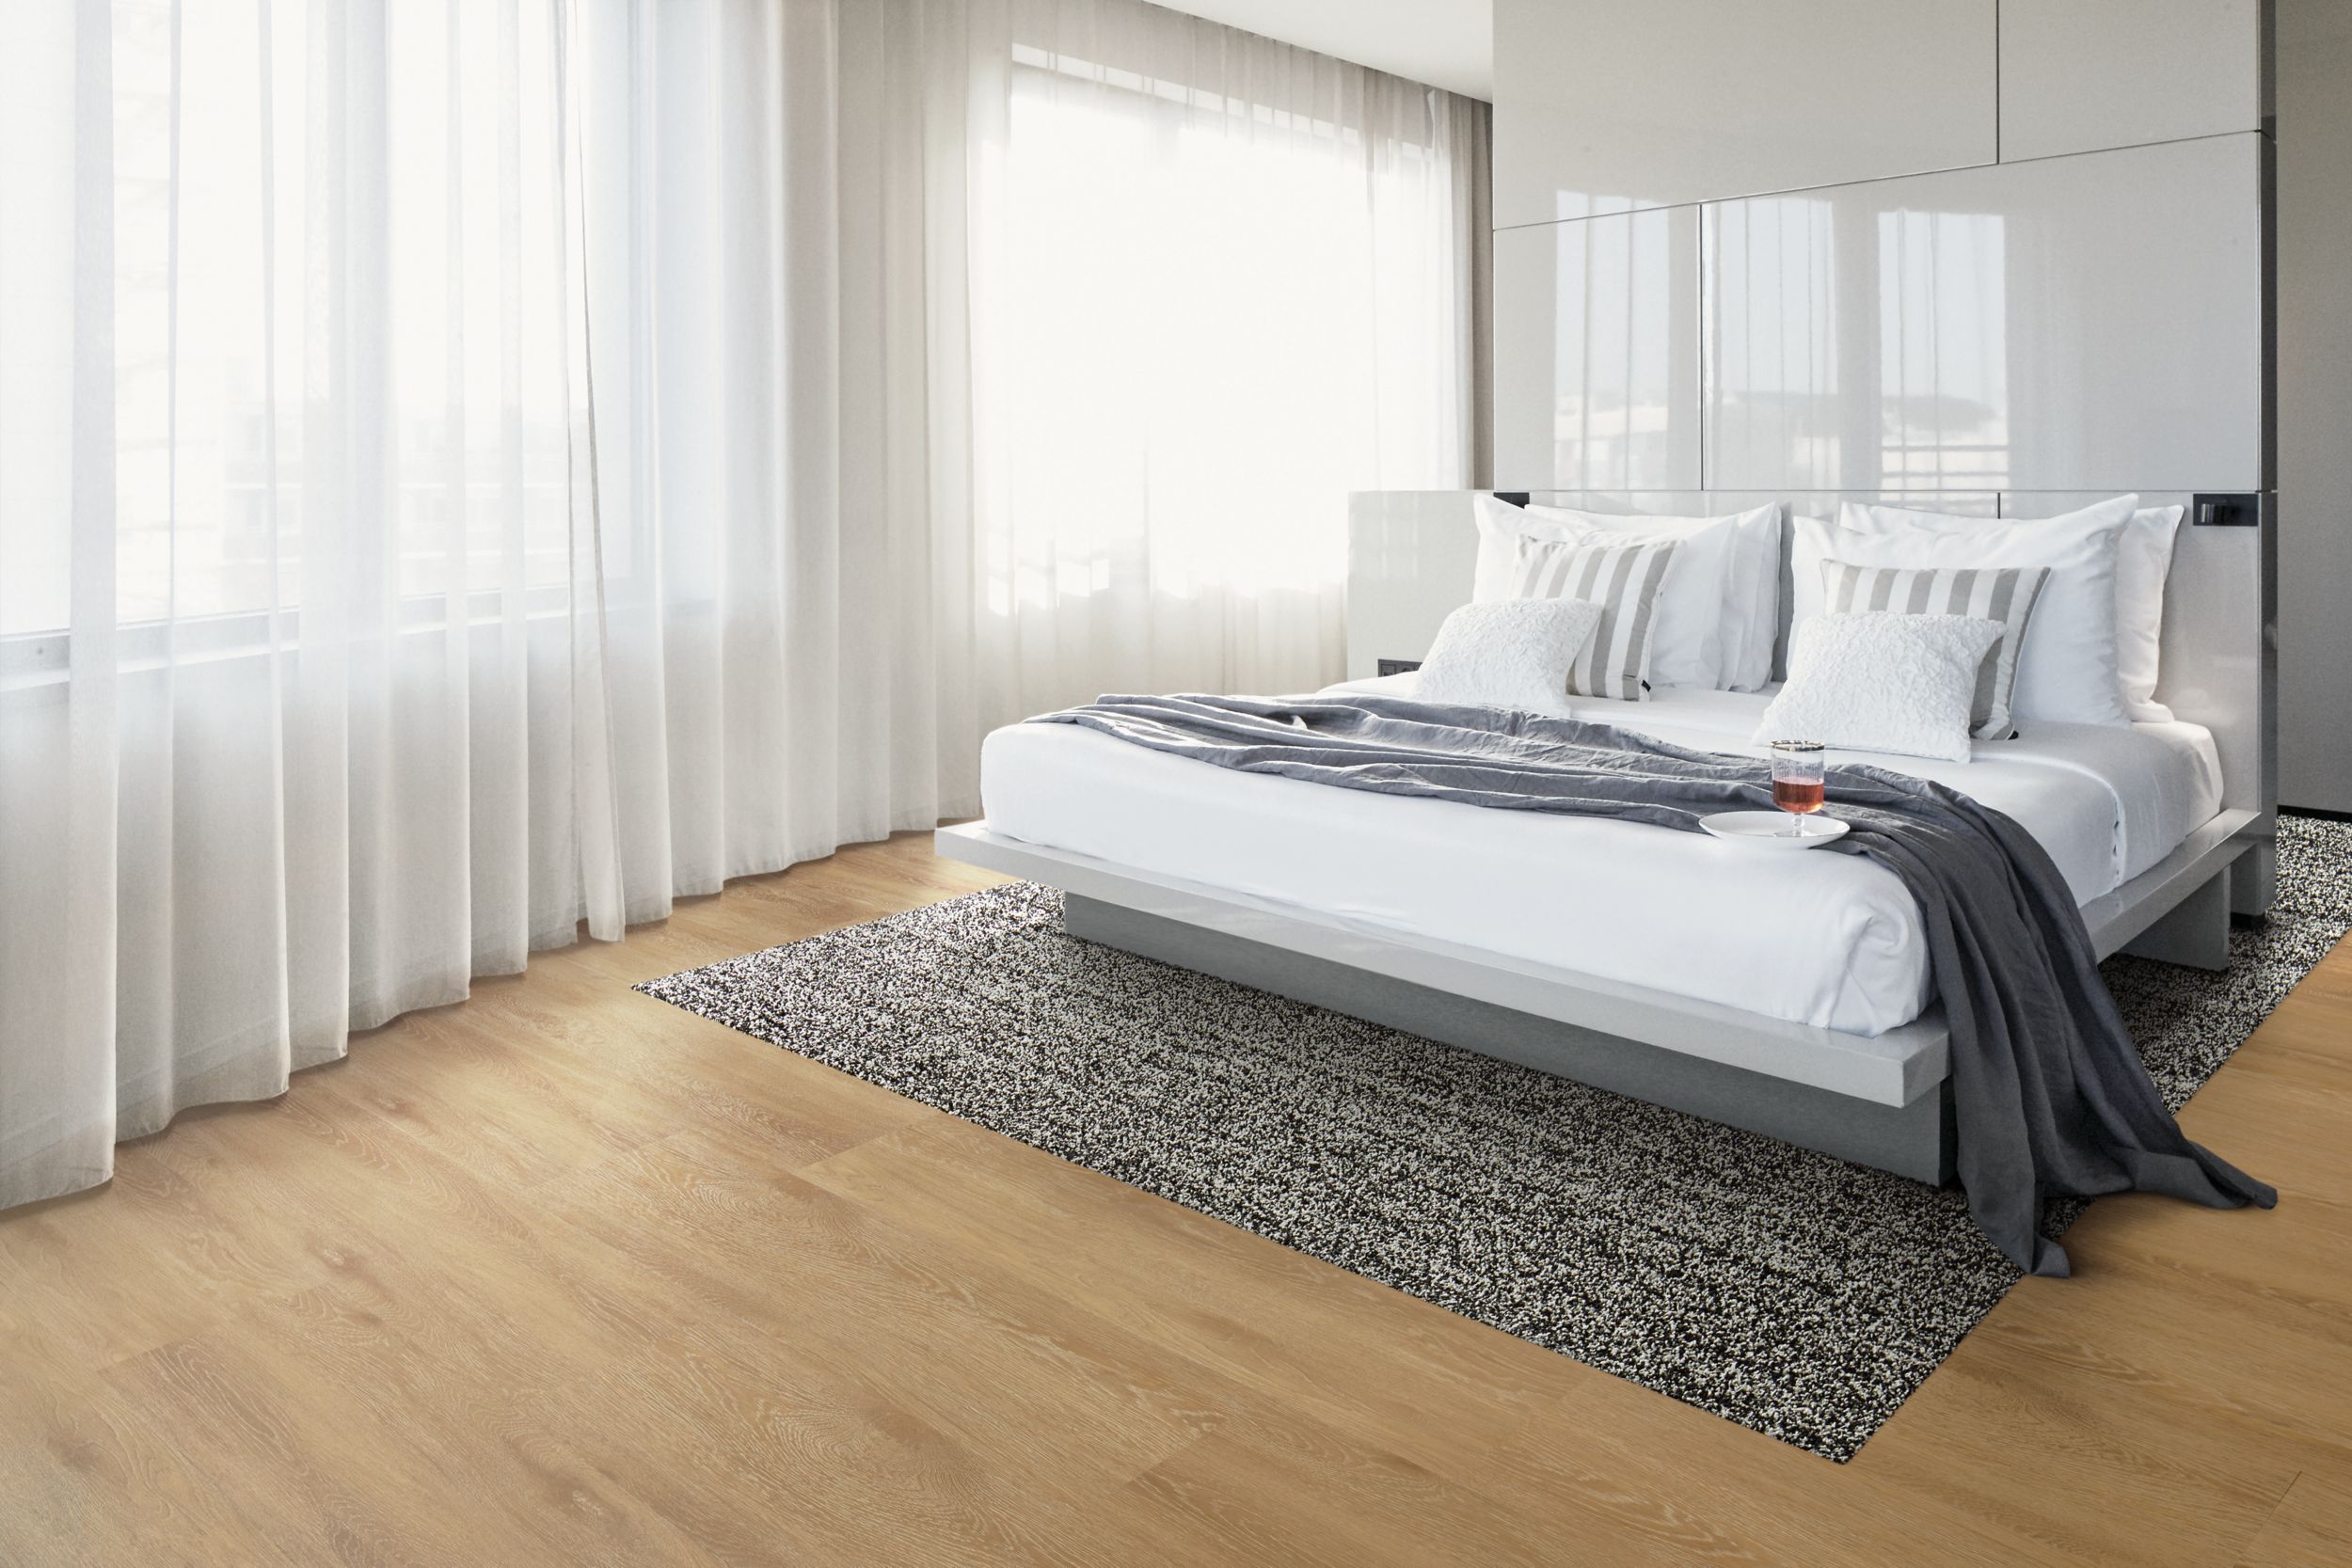 Interface Textured Woodgrains LVT and Overedge carpet tile in hotel suite imagen número 5